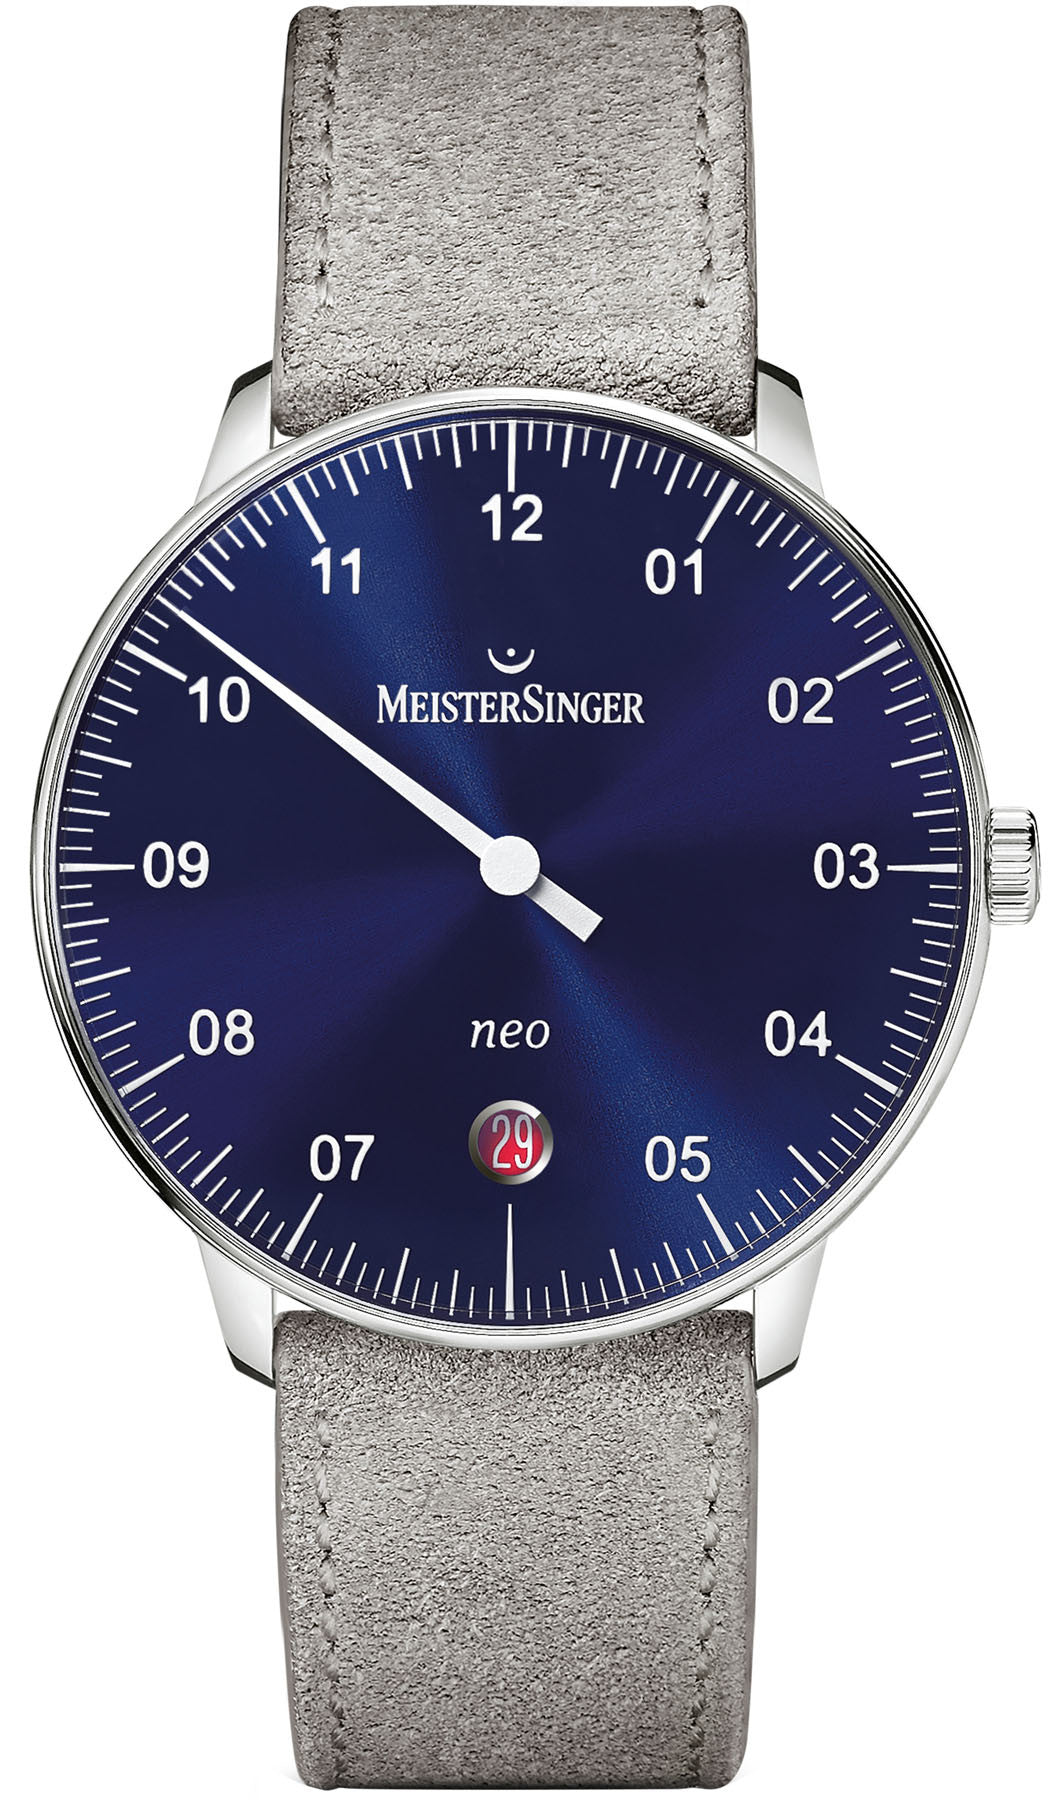 Photos - Wrist Watch MeisterSinger Watch Neo Suede Grey - Blue MS-179 